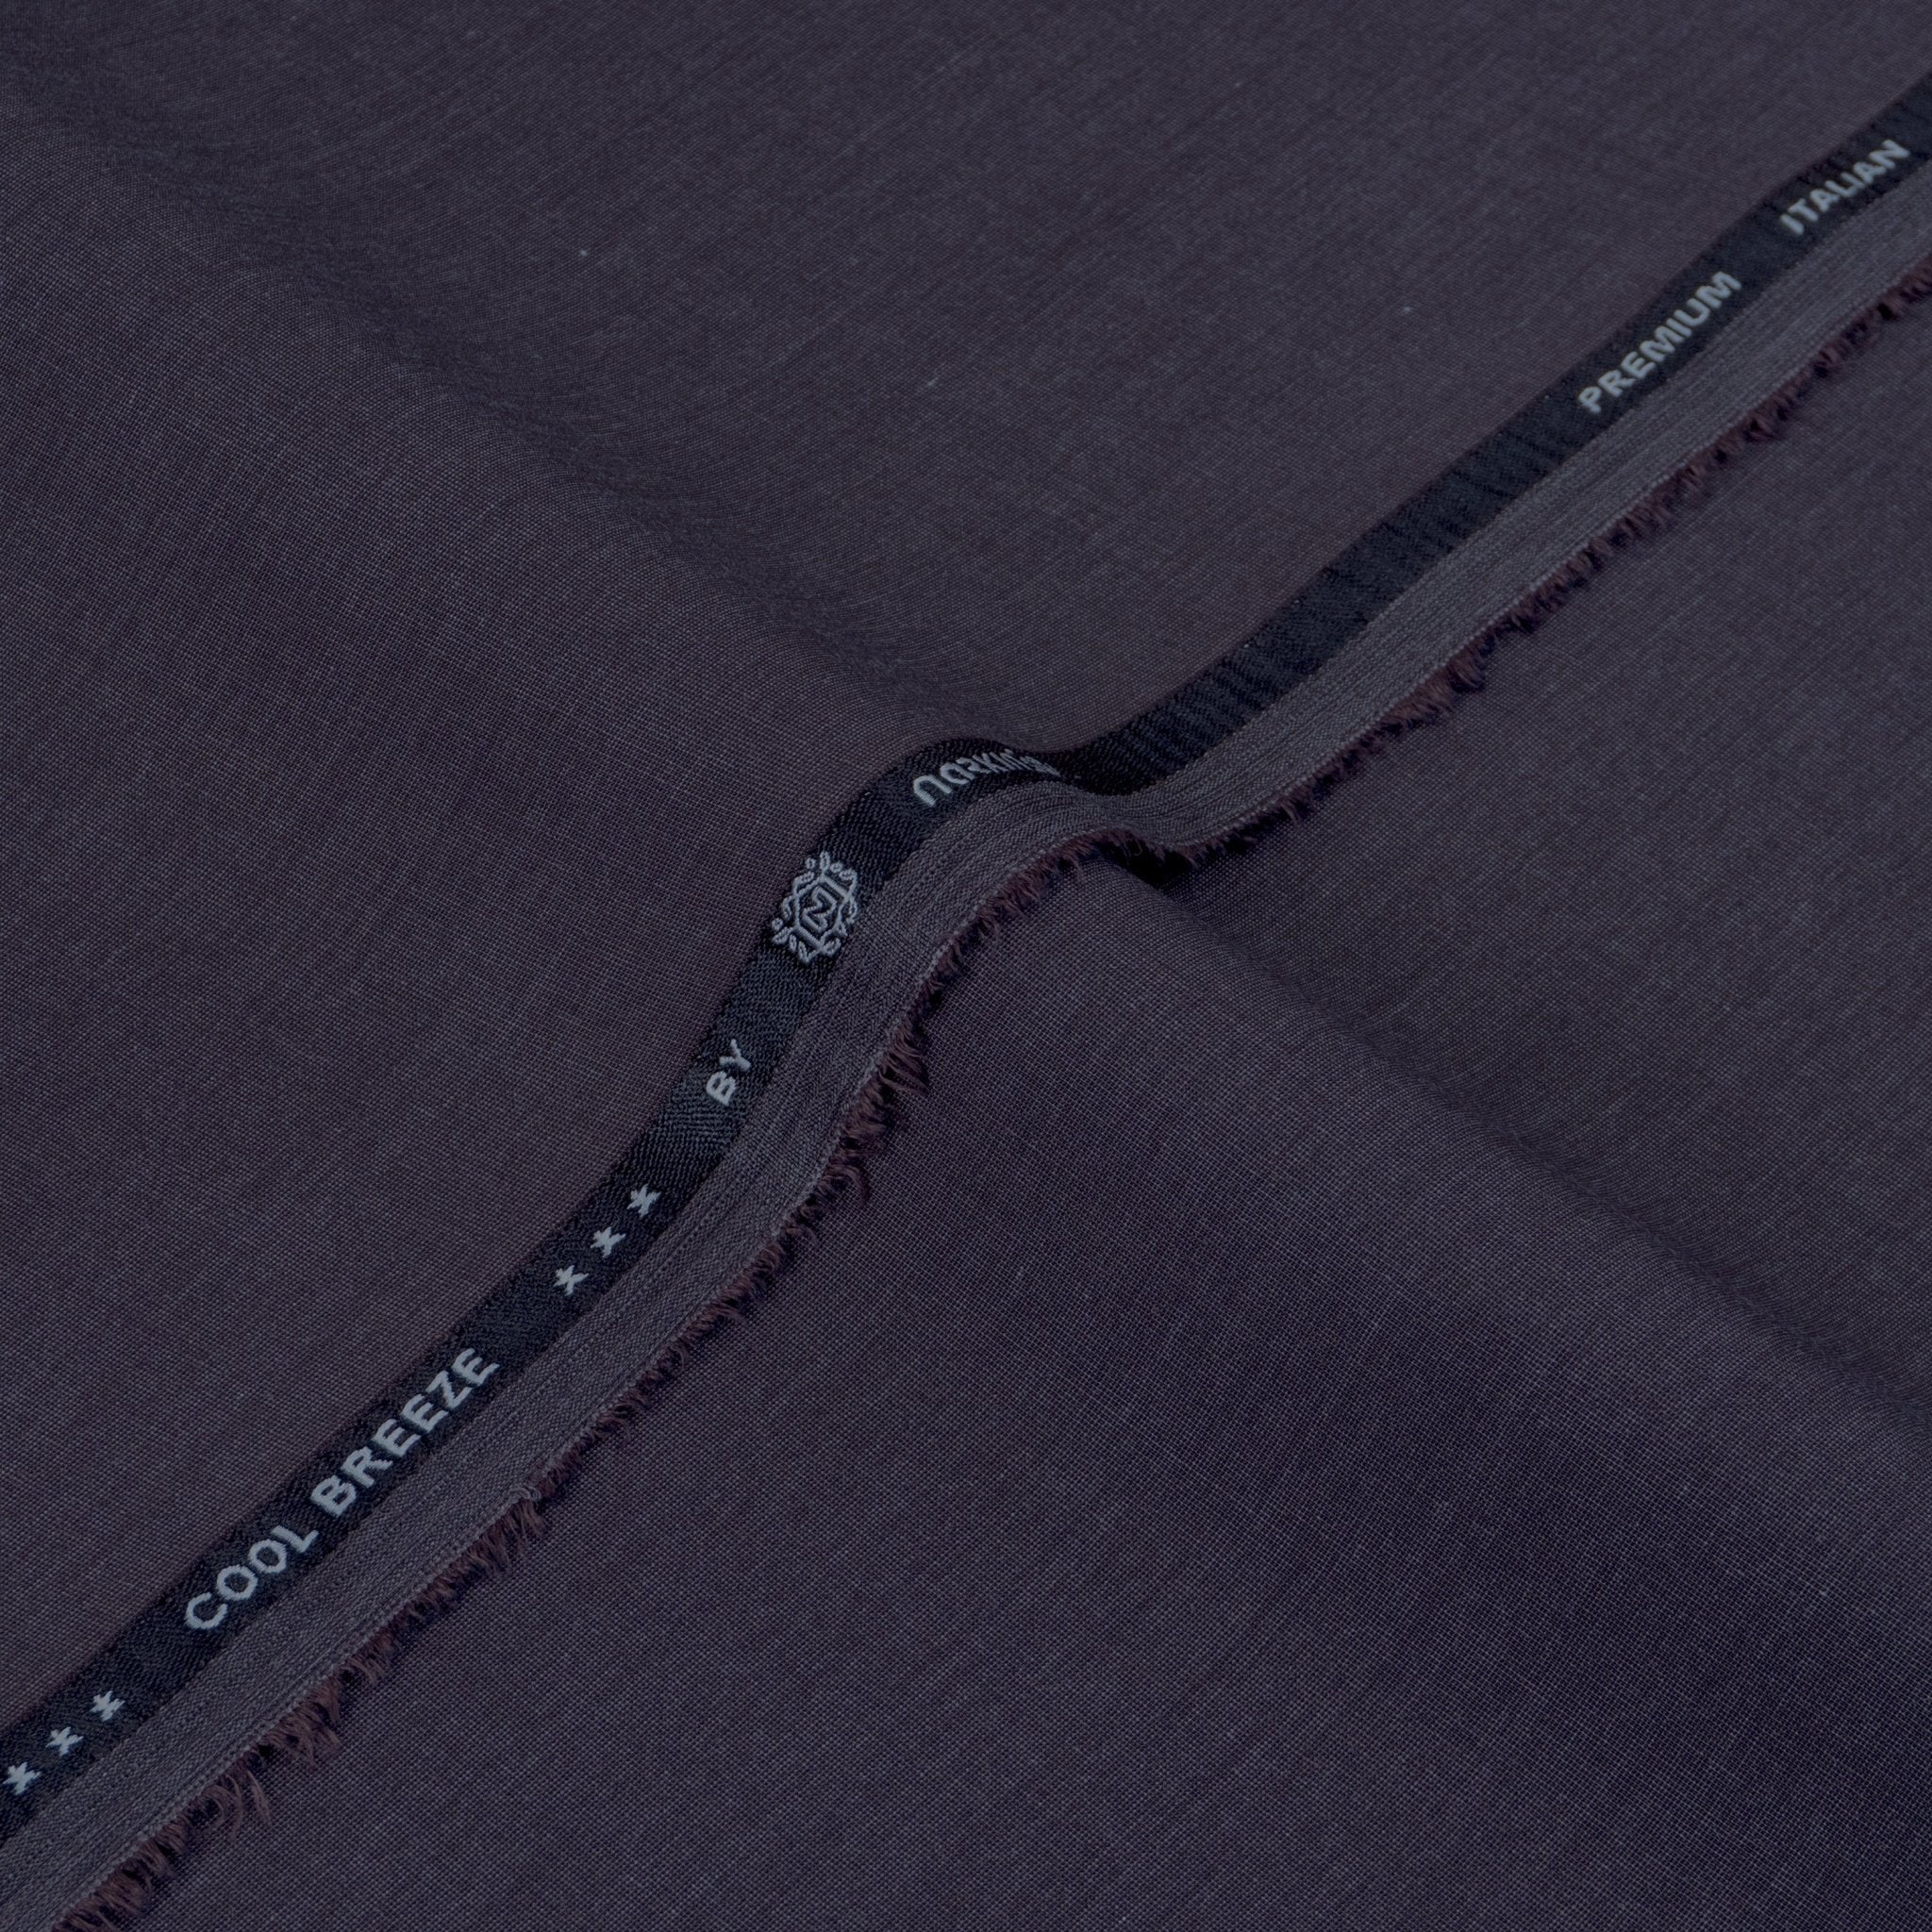 Cool Breeze 2 - Summer Blended (4.5 Mtr) - Narkin's Textile Industries